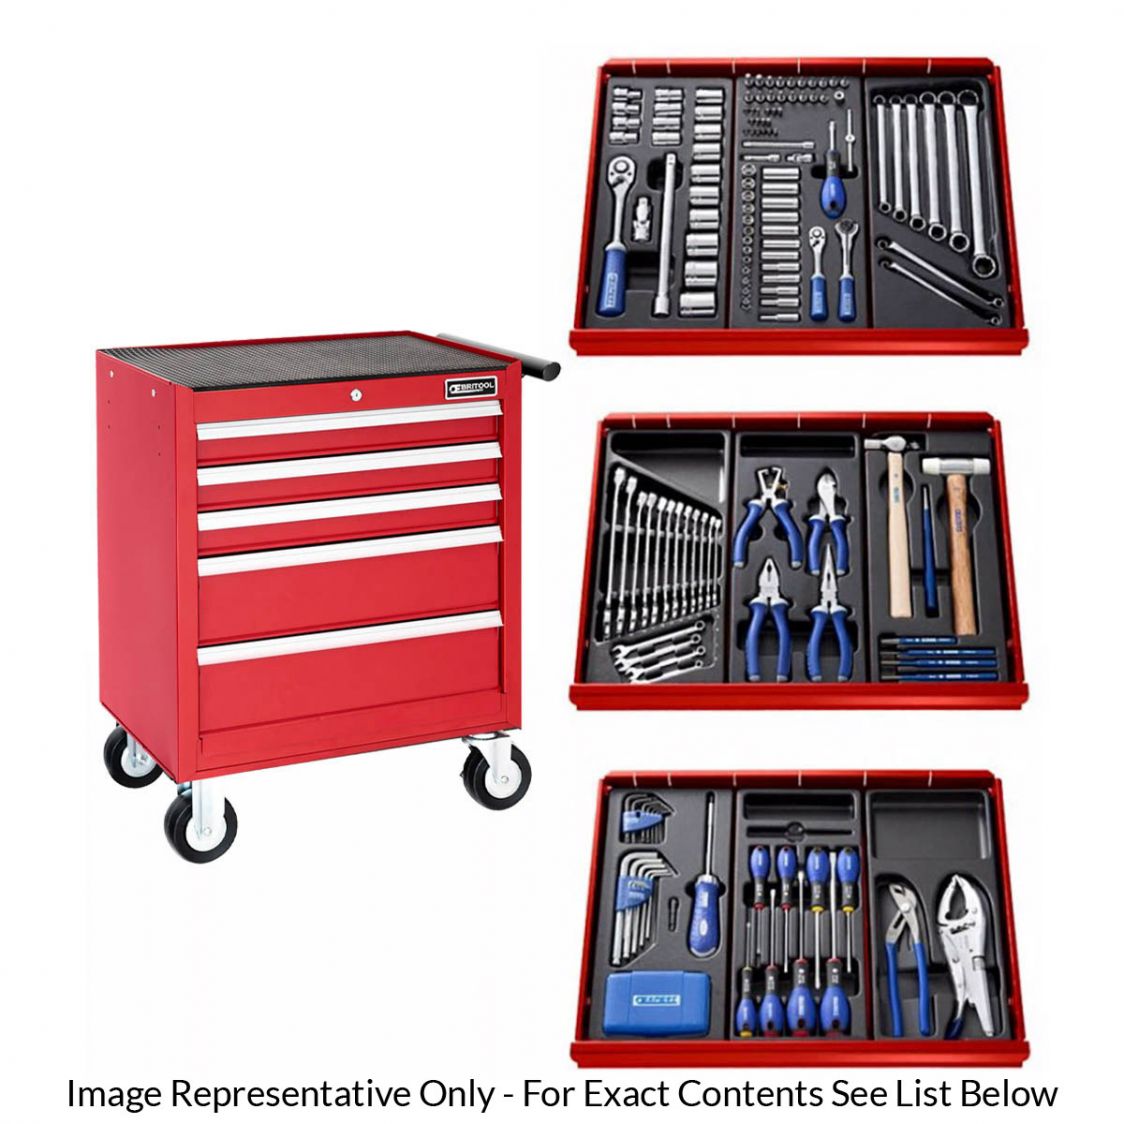 BRITOOL EXPERT E220321B - 207pc General Metric Tool Kit + 5 Drawer Roller Cabinet Red